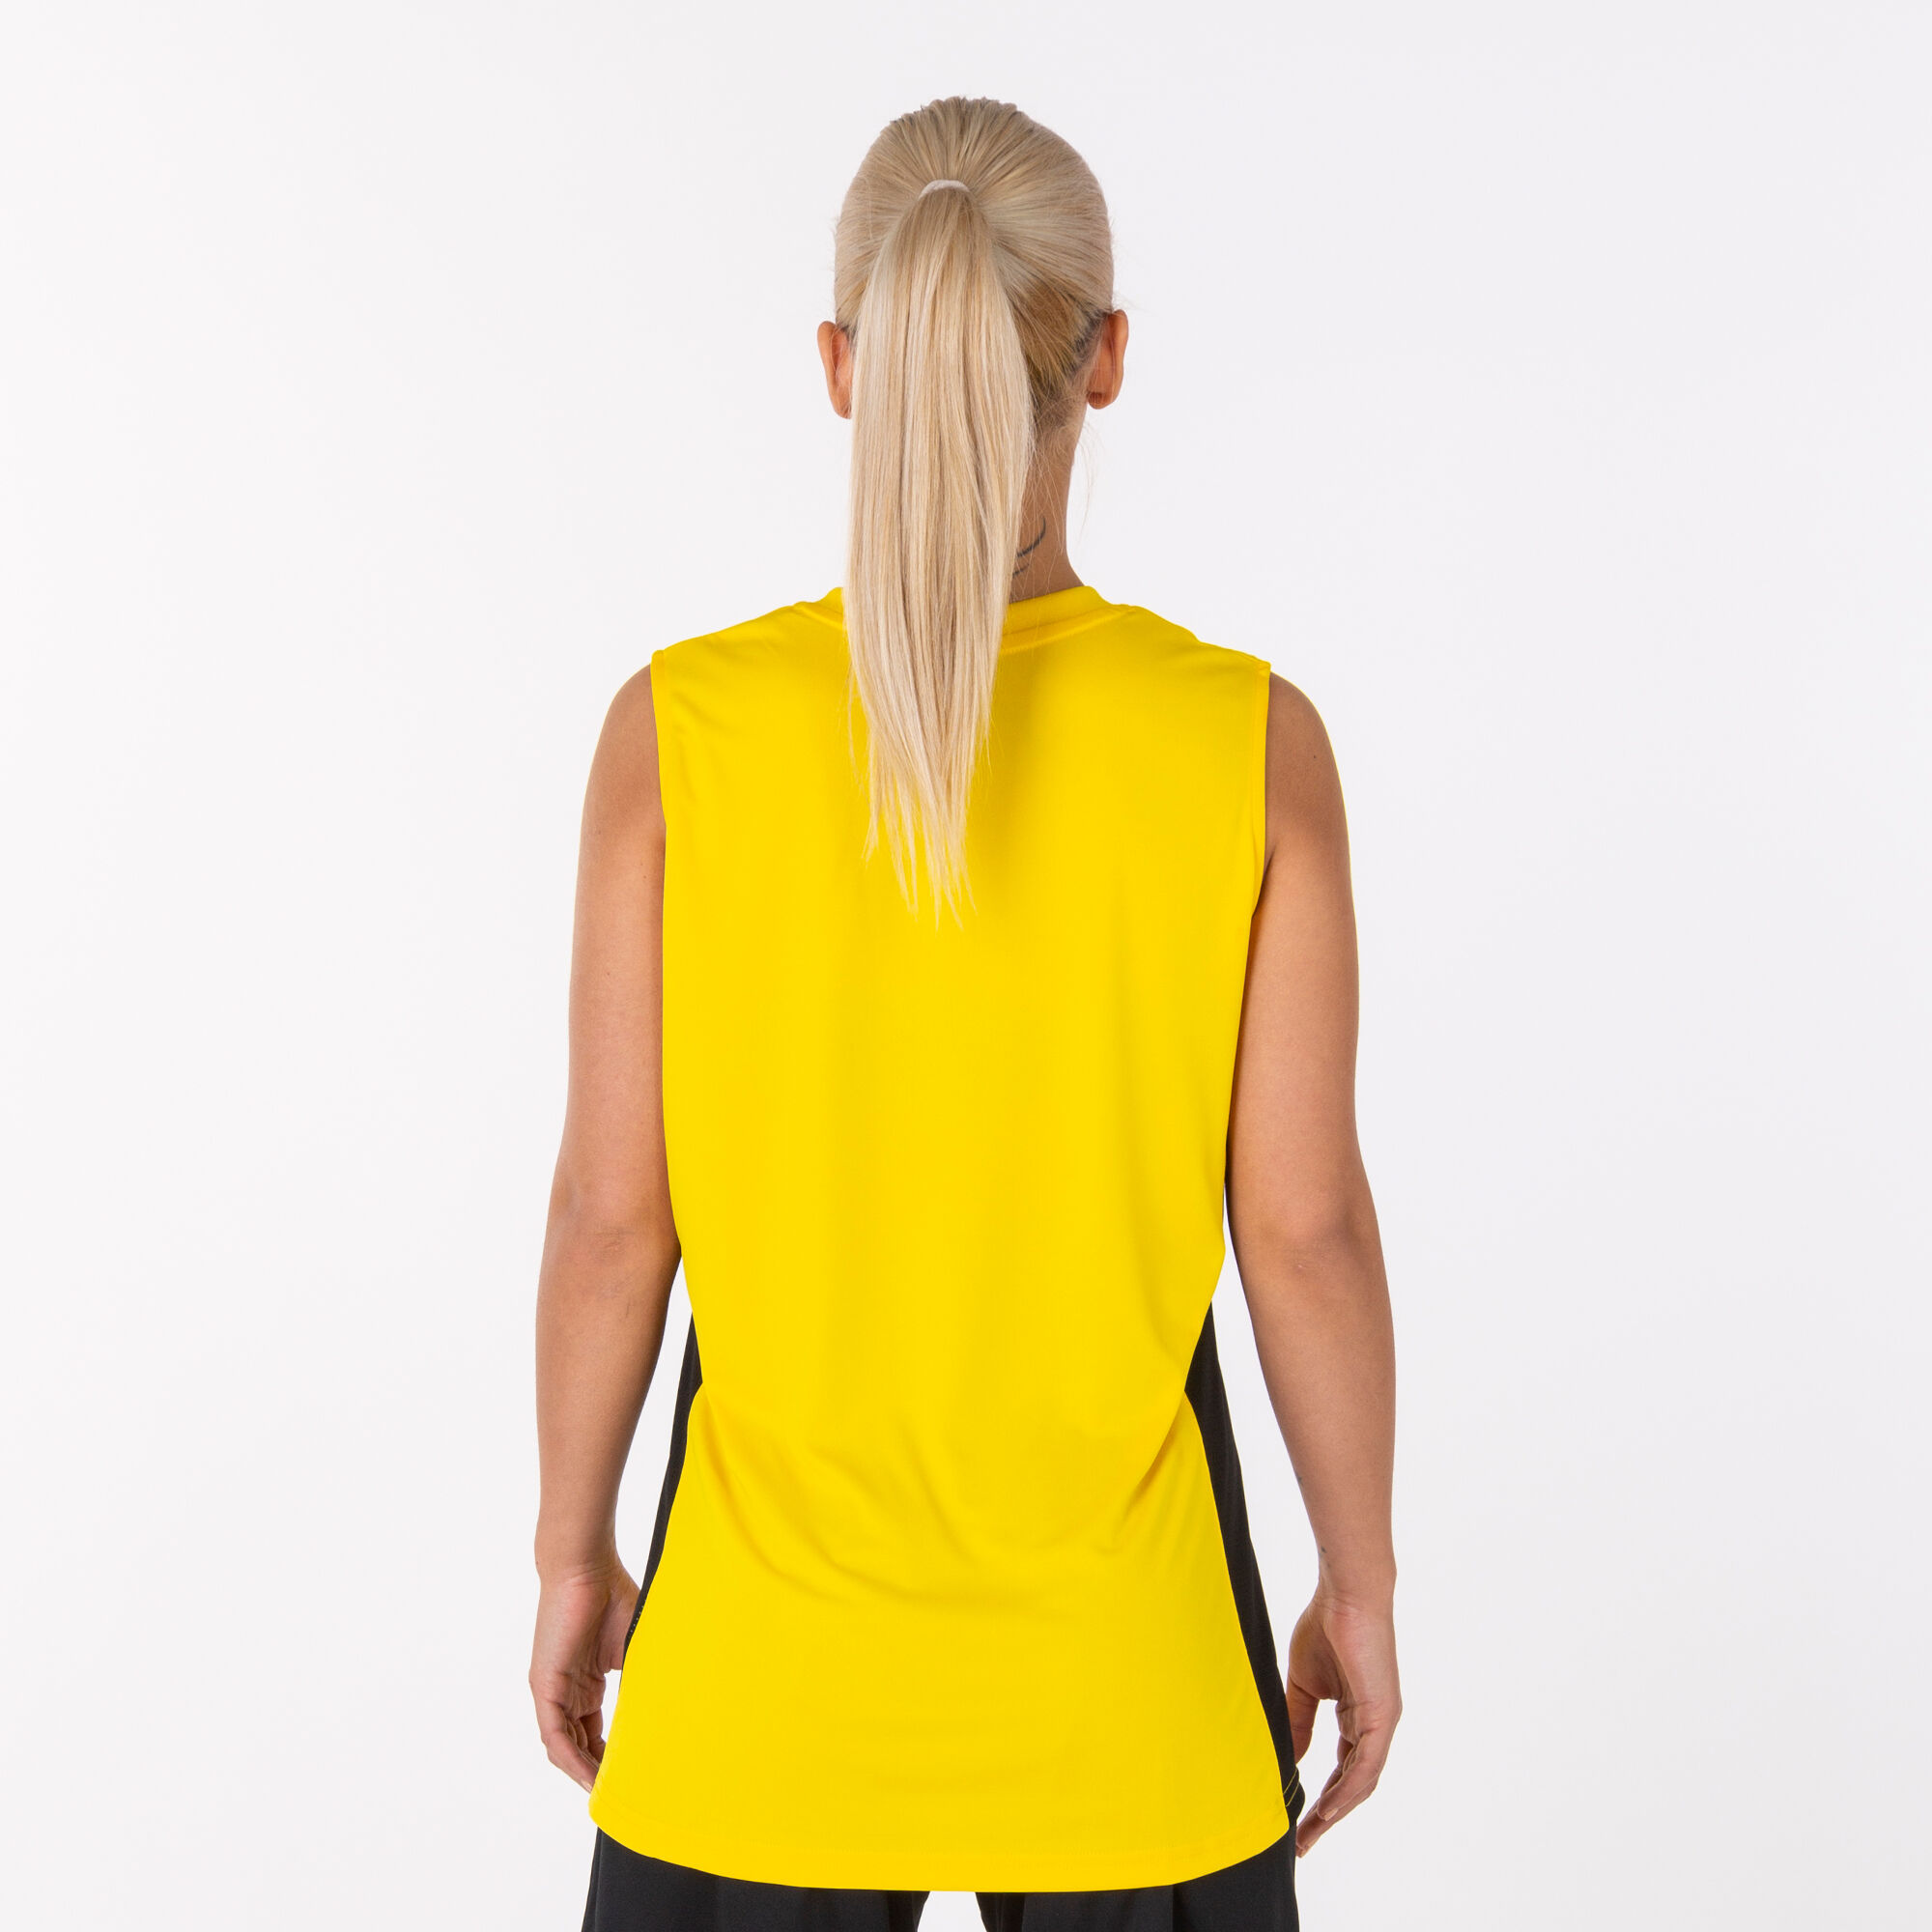 Camiseta sin mangas mujer Cancha III amarillo negro